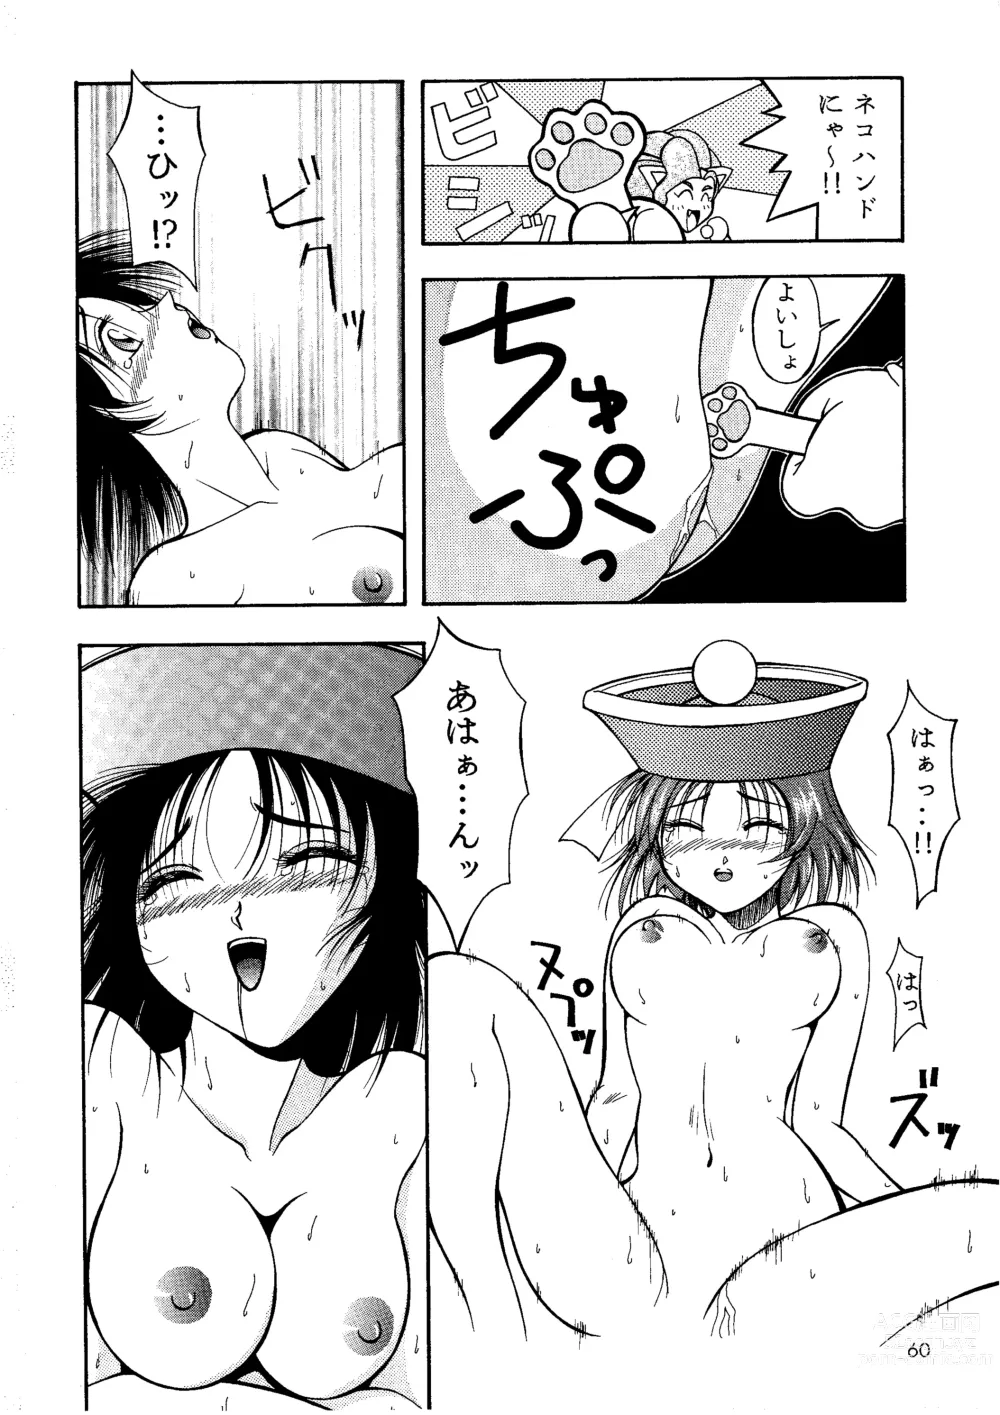 Page 60 of doujinshi Loveless